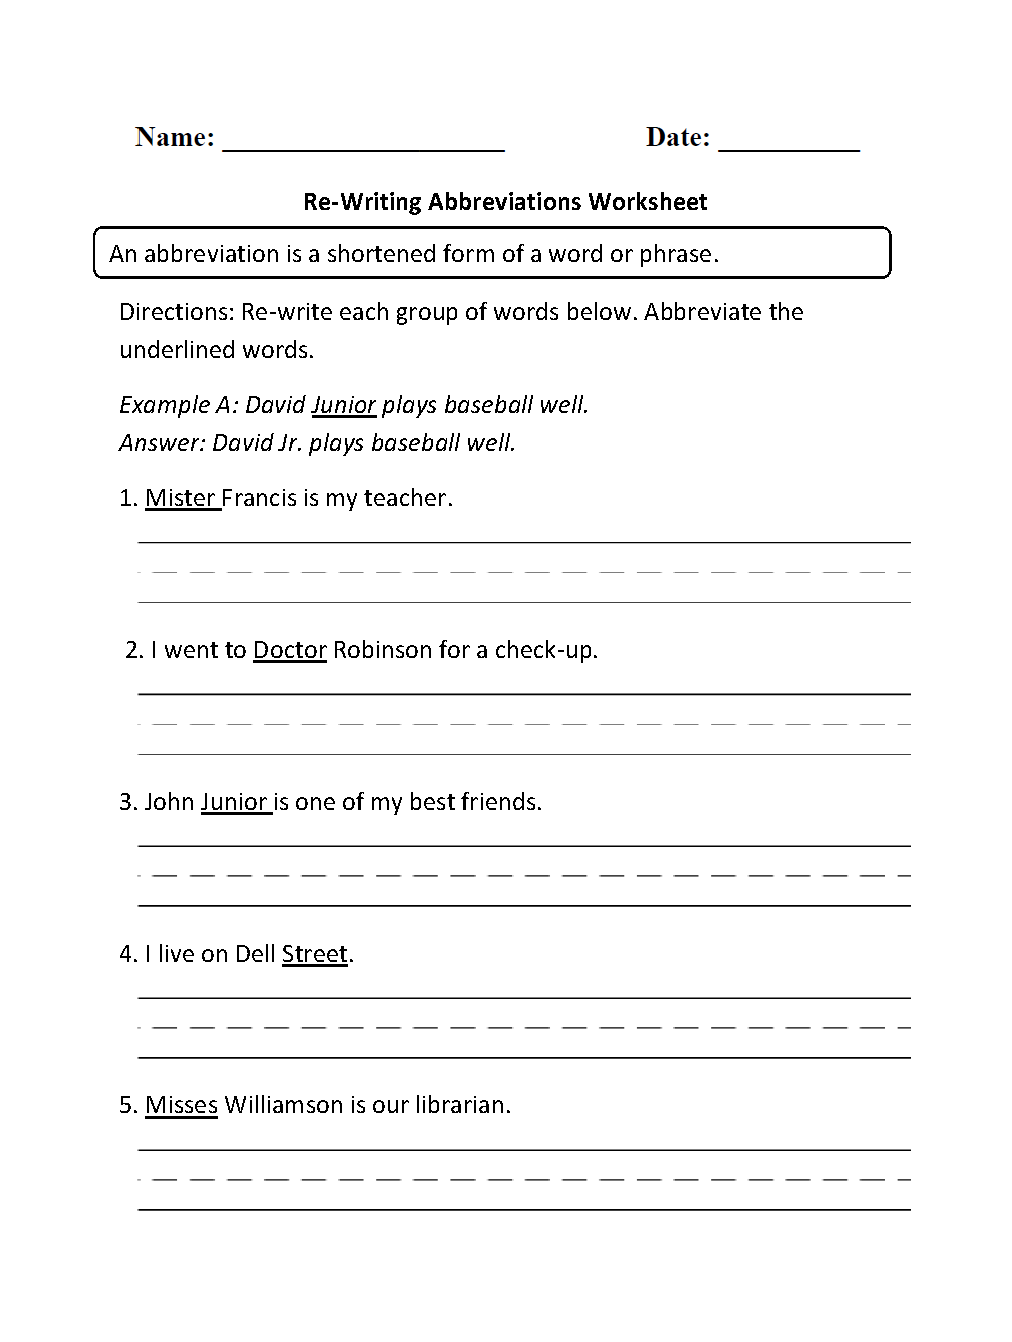 Re-Writing Abbreviations Worksheet